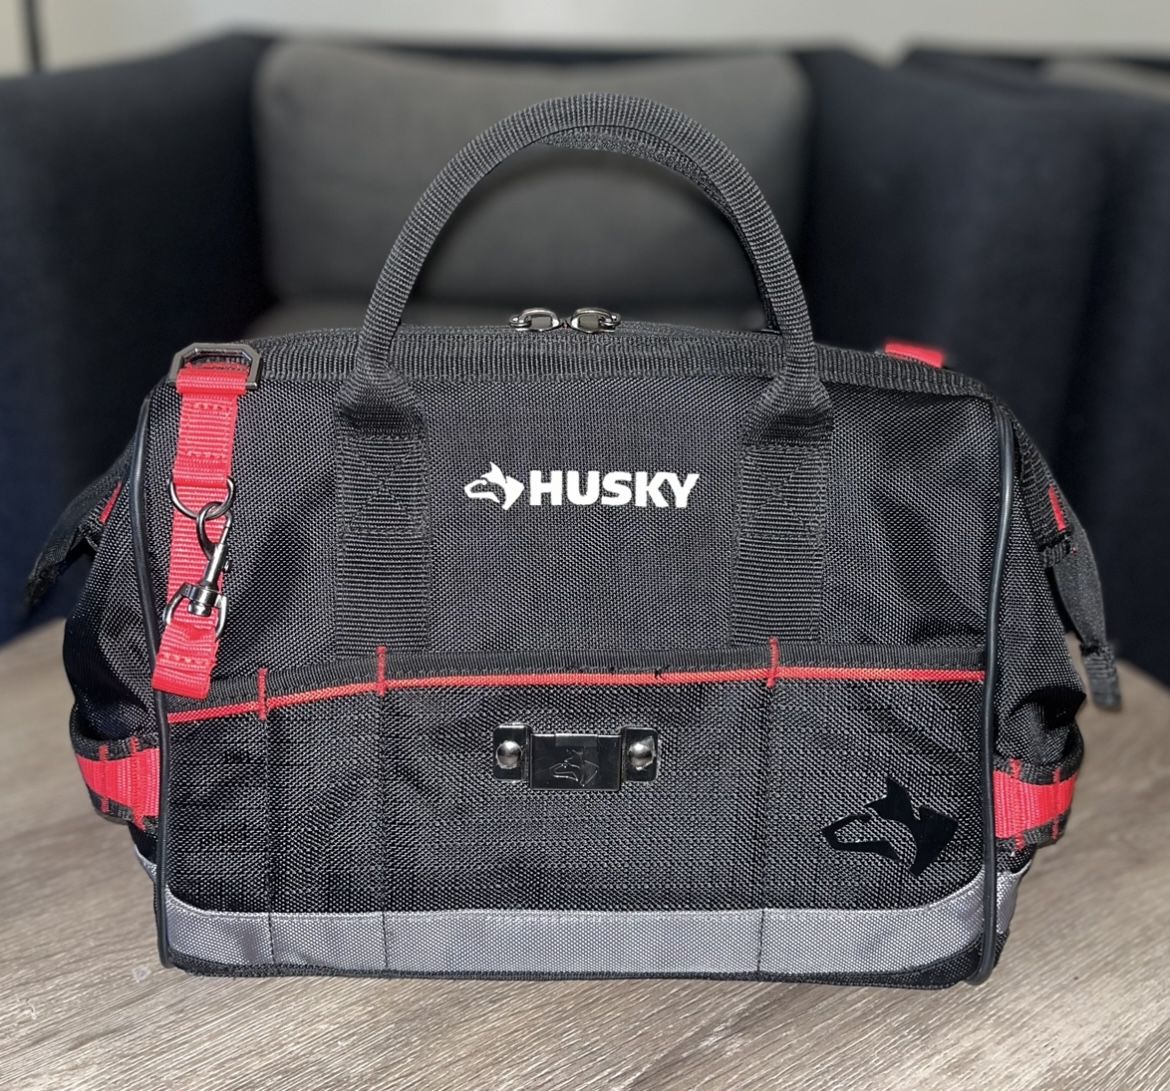 Husky heavy duty 14 inch Pro Tool Bag